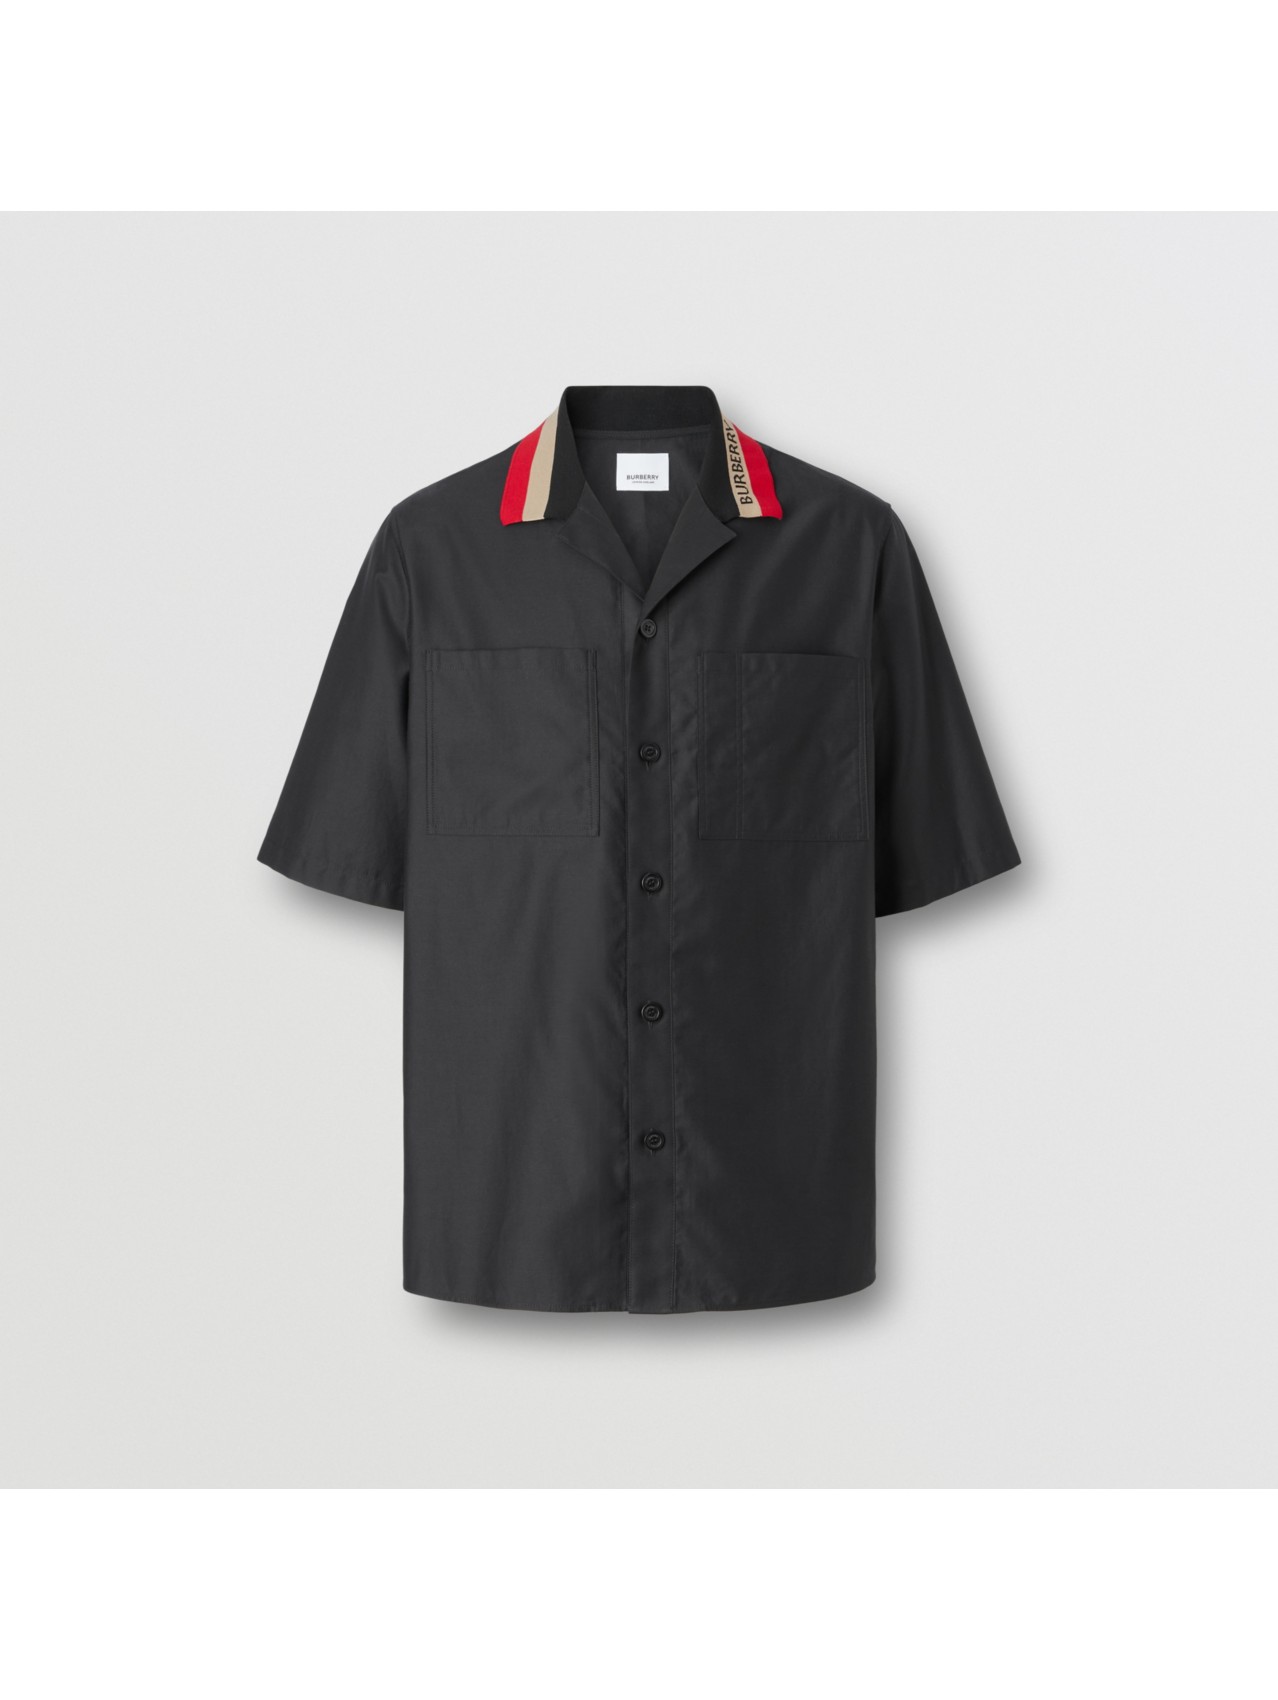 Men’s Shirts | Burberry® Official